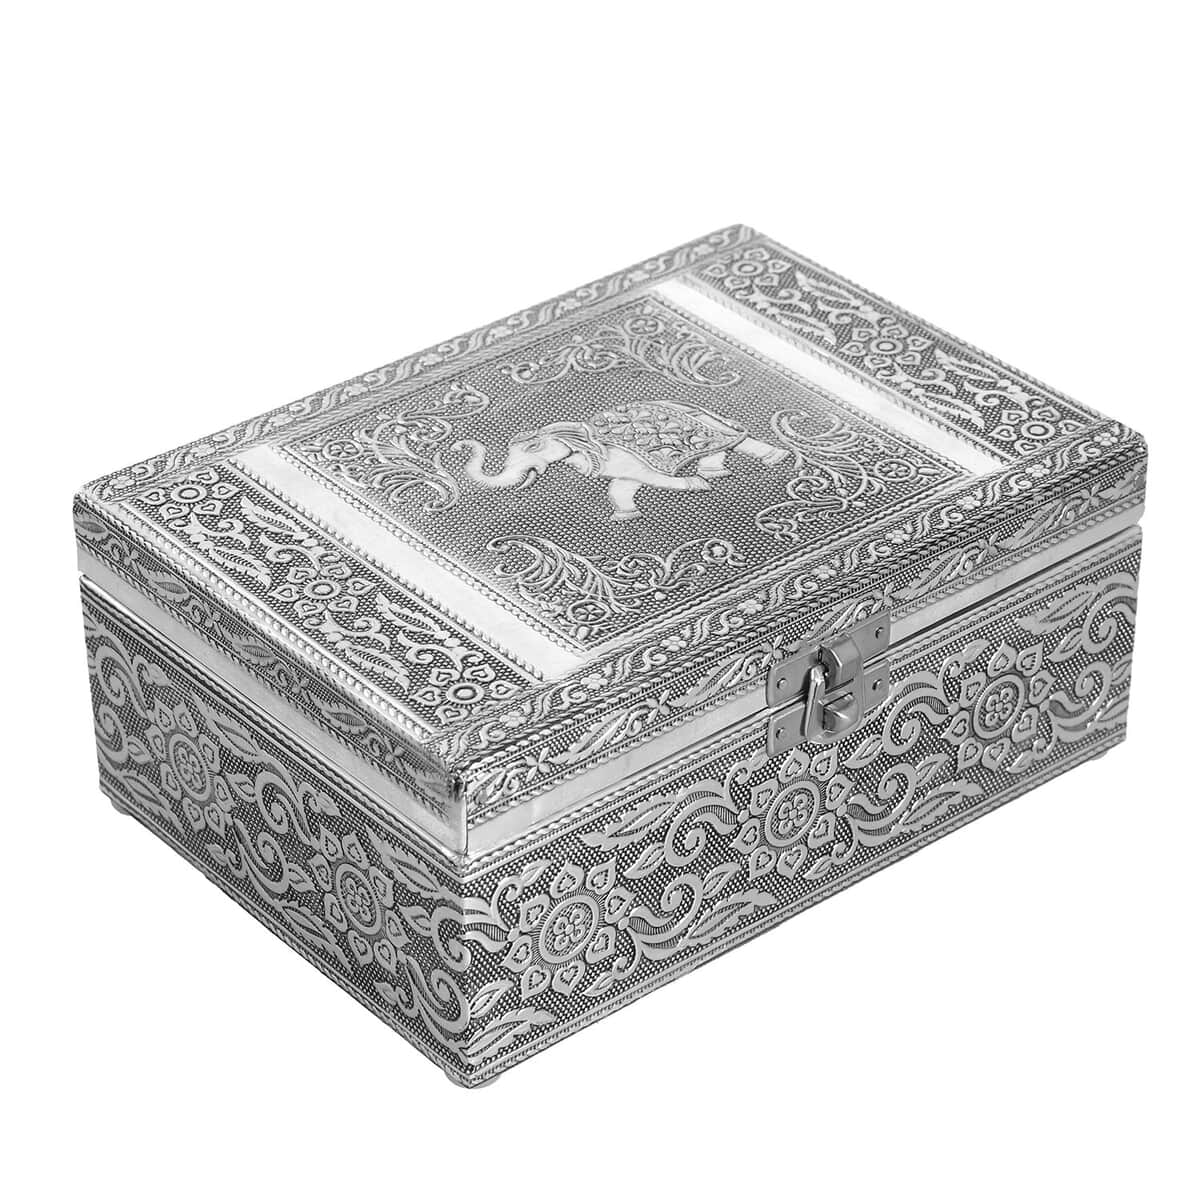 Aluminum Oxidized Elephant Pattern Jewelry Box with Tray image number 0